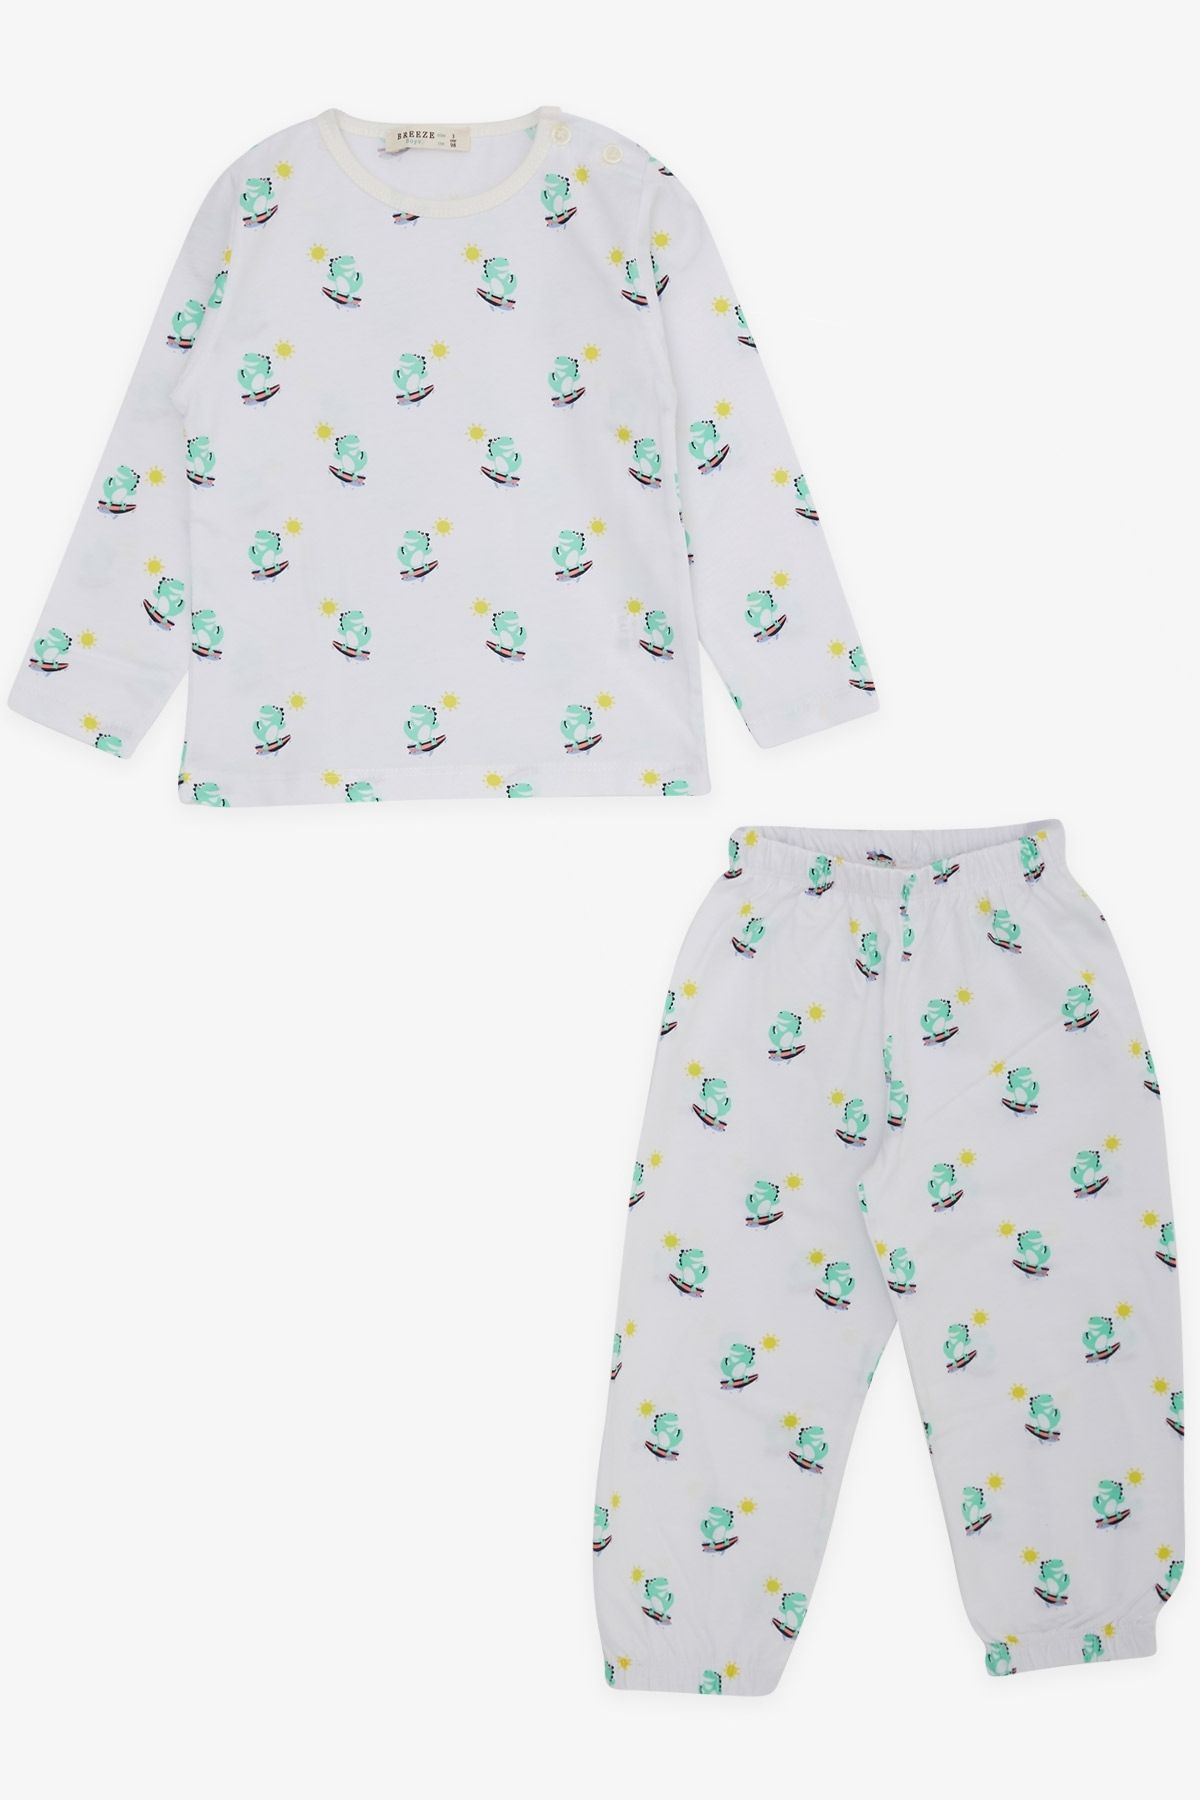 Breeze Erkek Bebek Pijama Takımı Sörfçü Dinozor Desenli 9 Ay-3 Yaş, Beyaz